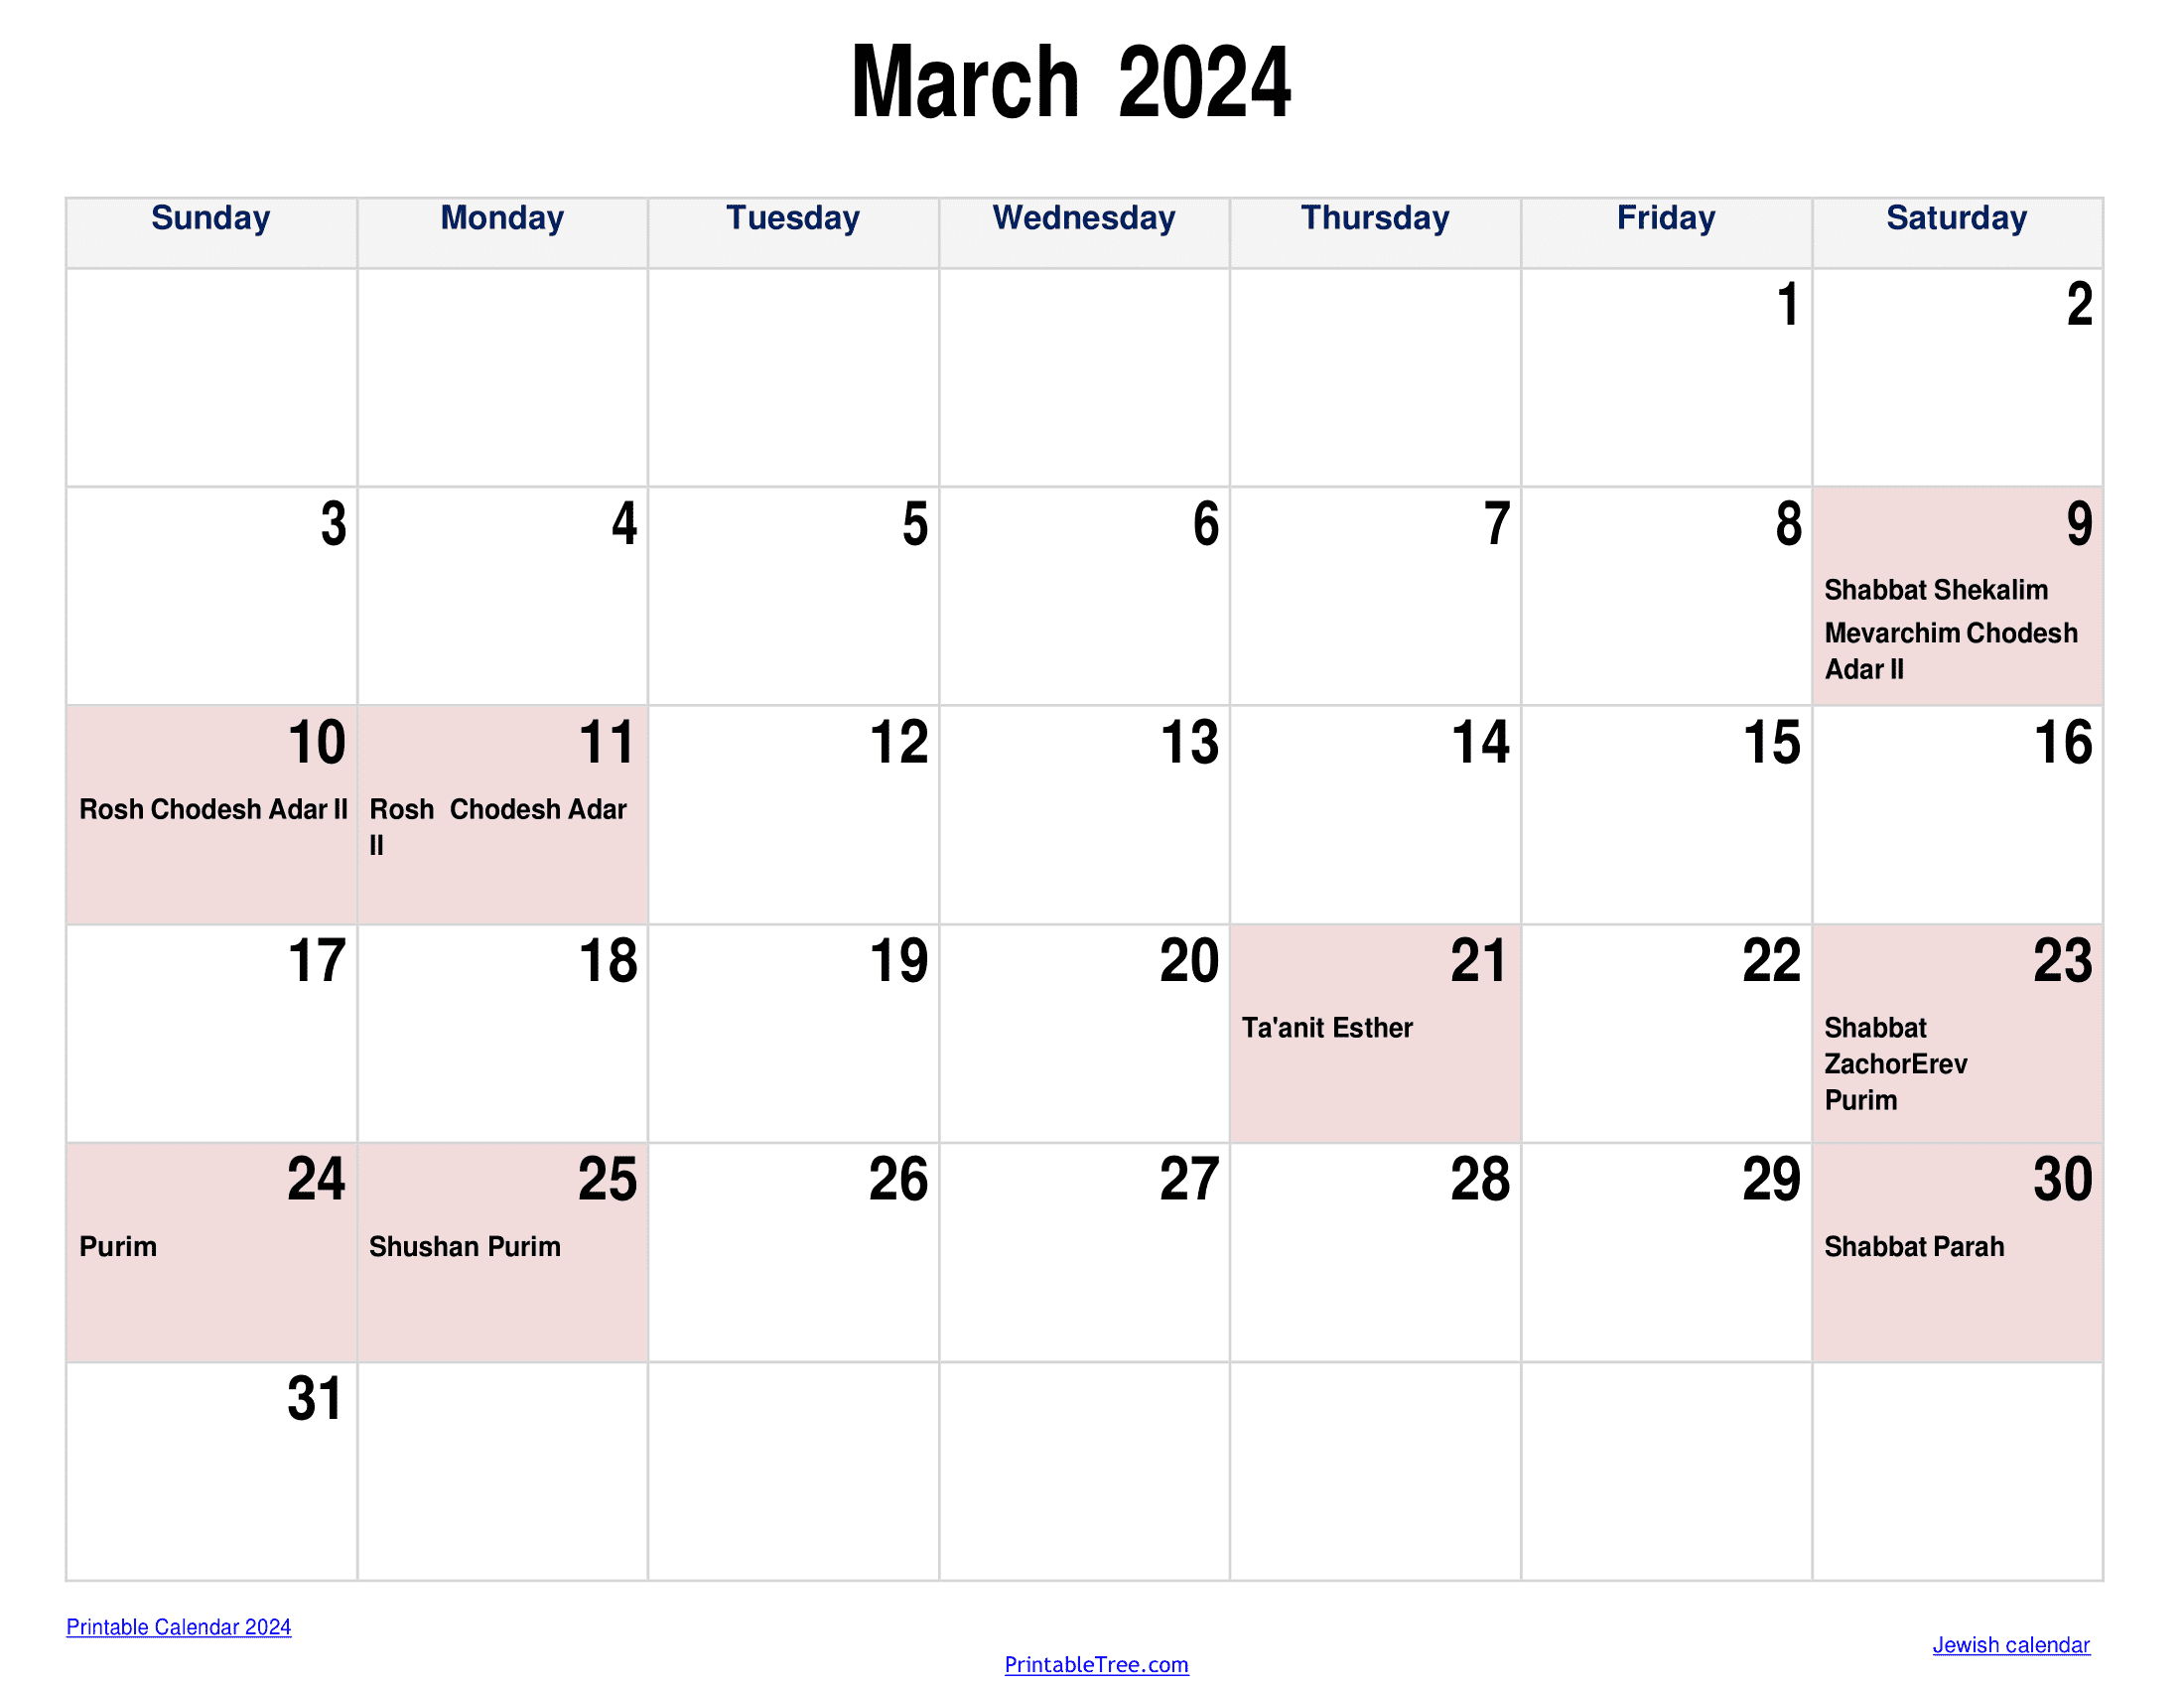 Jewish Calendar 2023, 2024 Pdf Templates With Jewish Holidays Lists for Jewish Calendar 2024 Printable